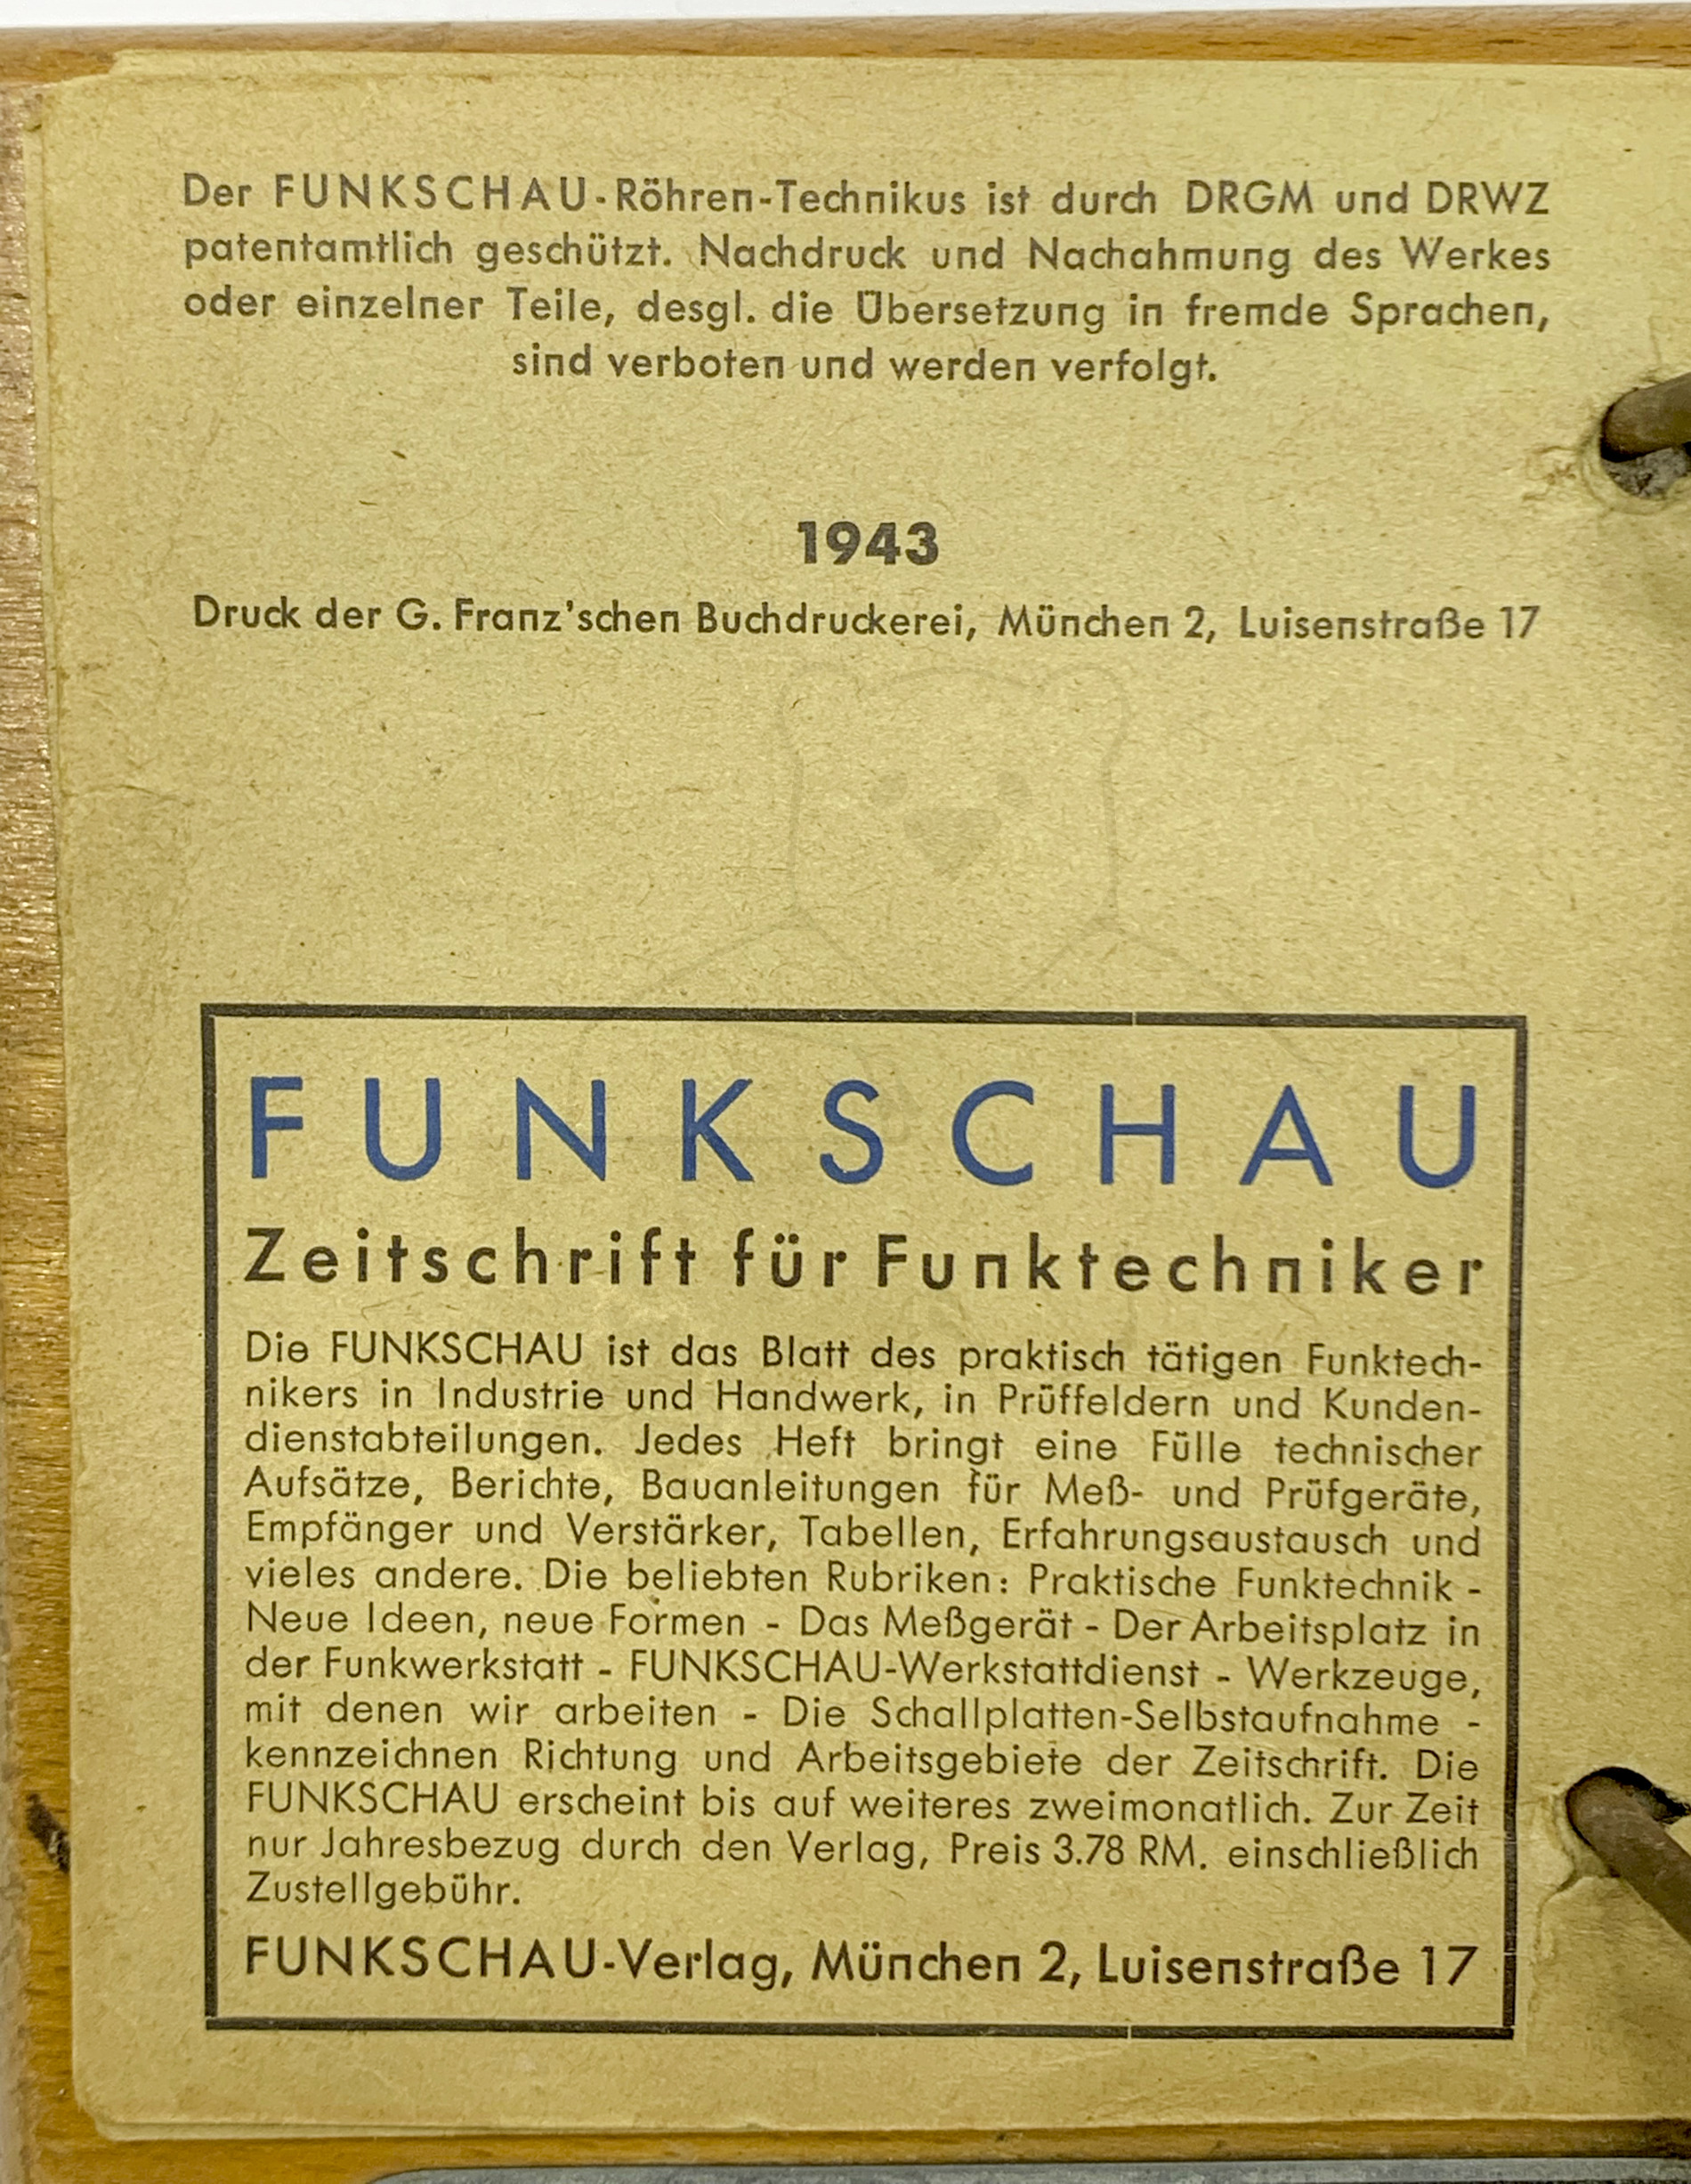 Funkschau Röhren Technikus (1943) - Impressum